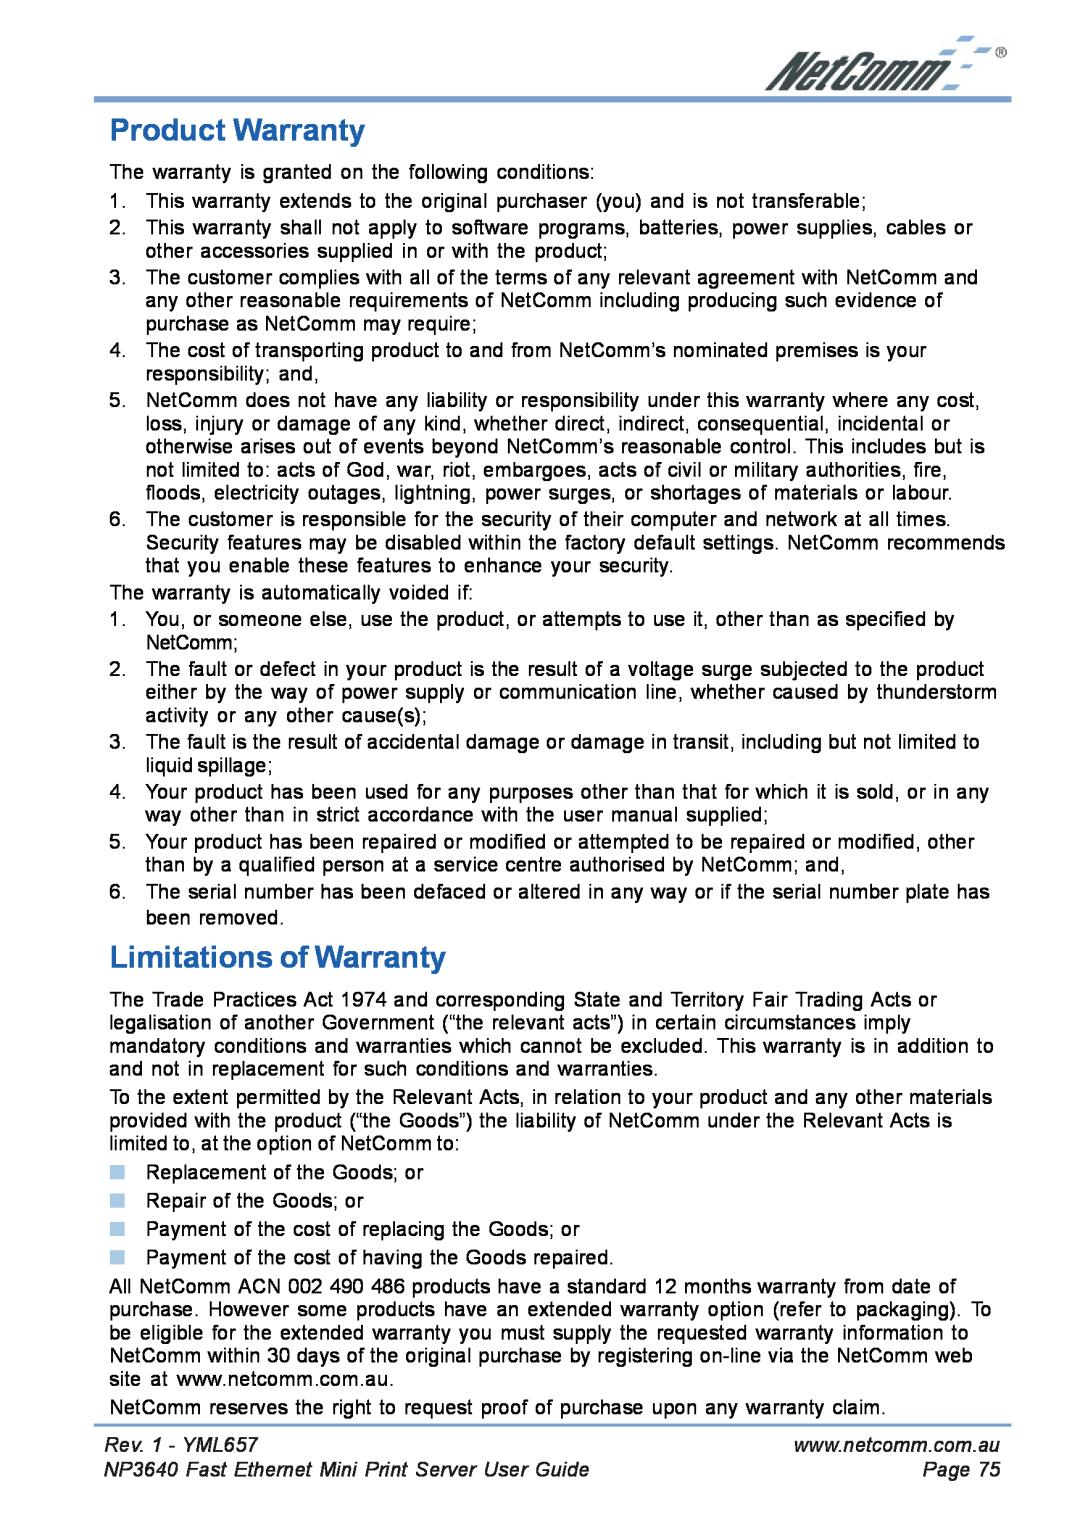 NetComm NP3640 manual Product Warranty, Limitations of Warranty, Rev. 1 - YML657, Page 